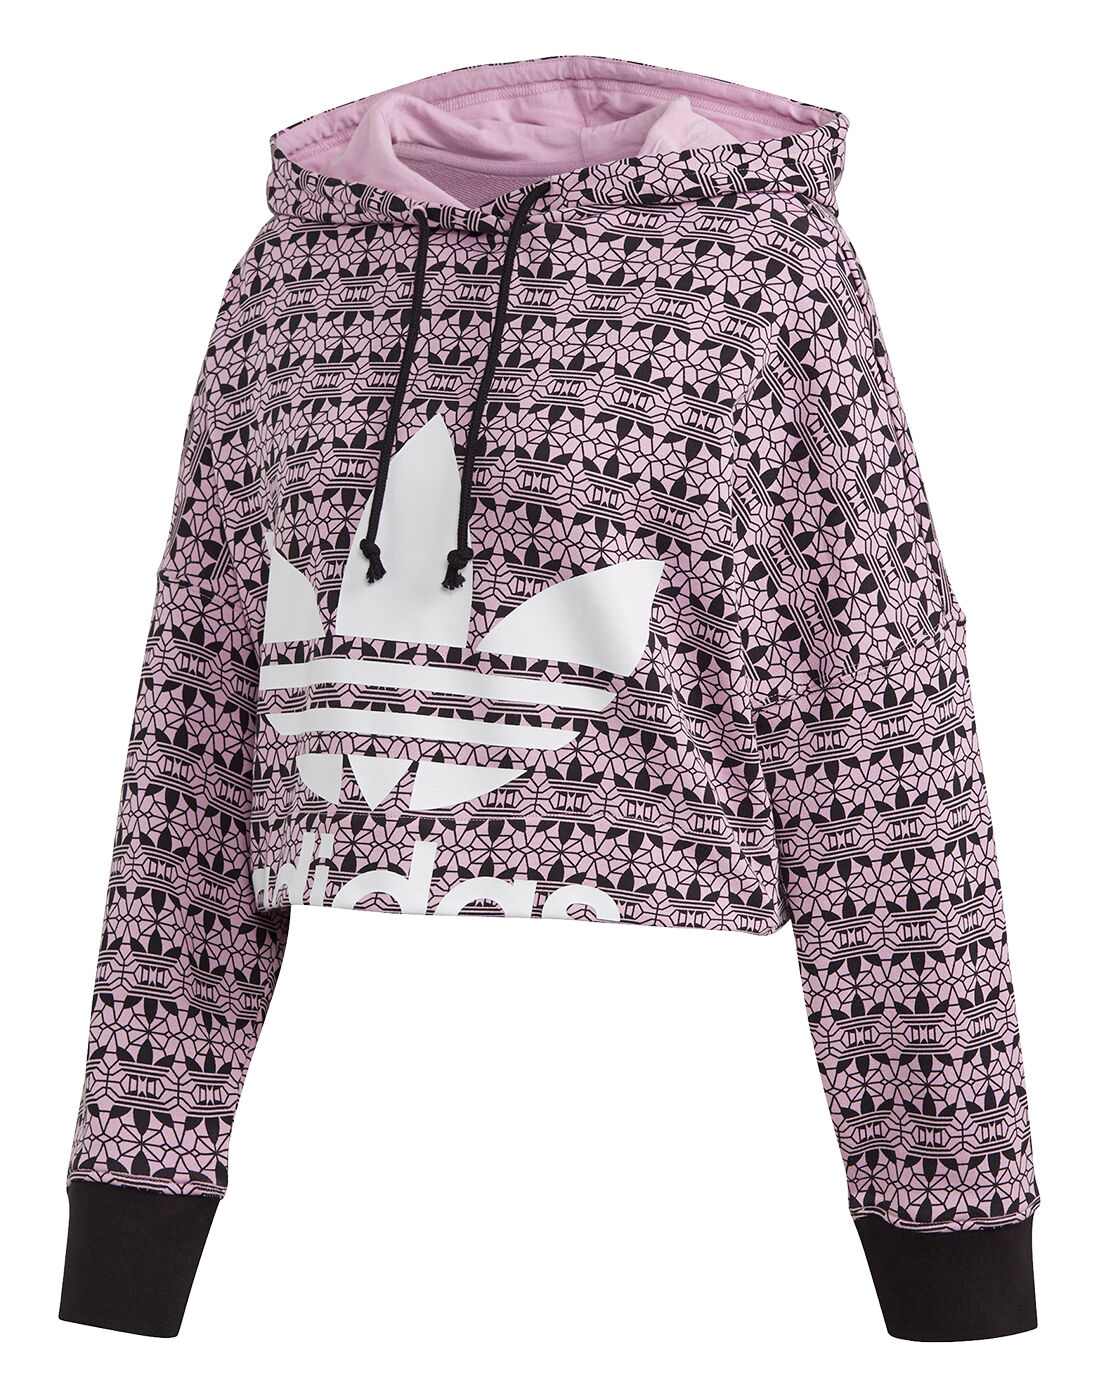 women's adidas originals graphic allover print hoodie